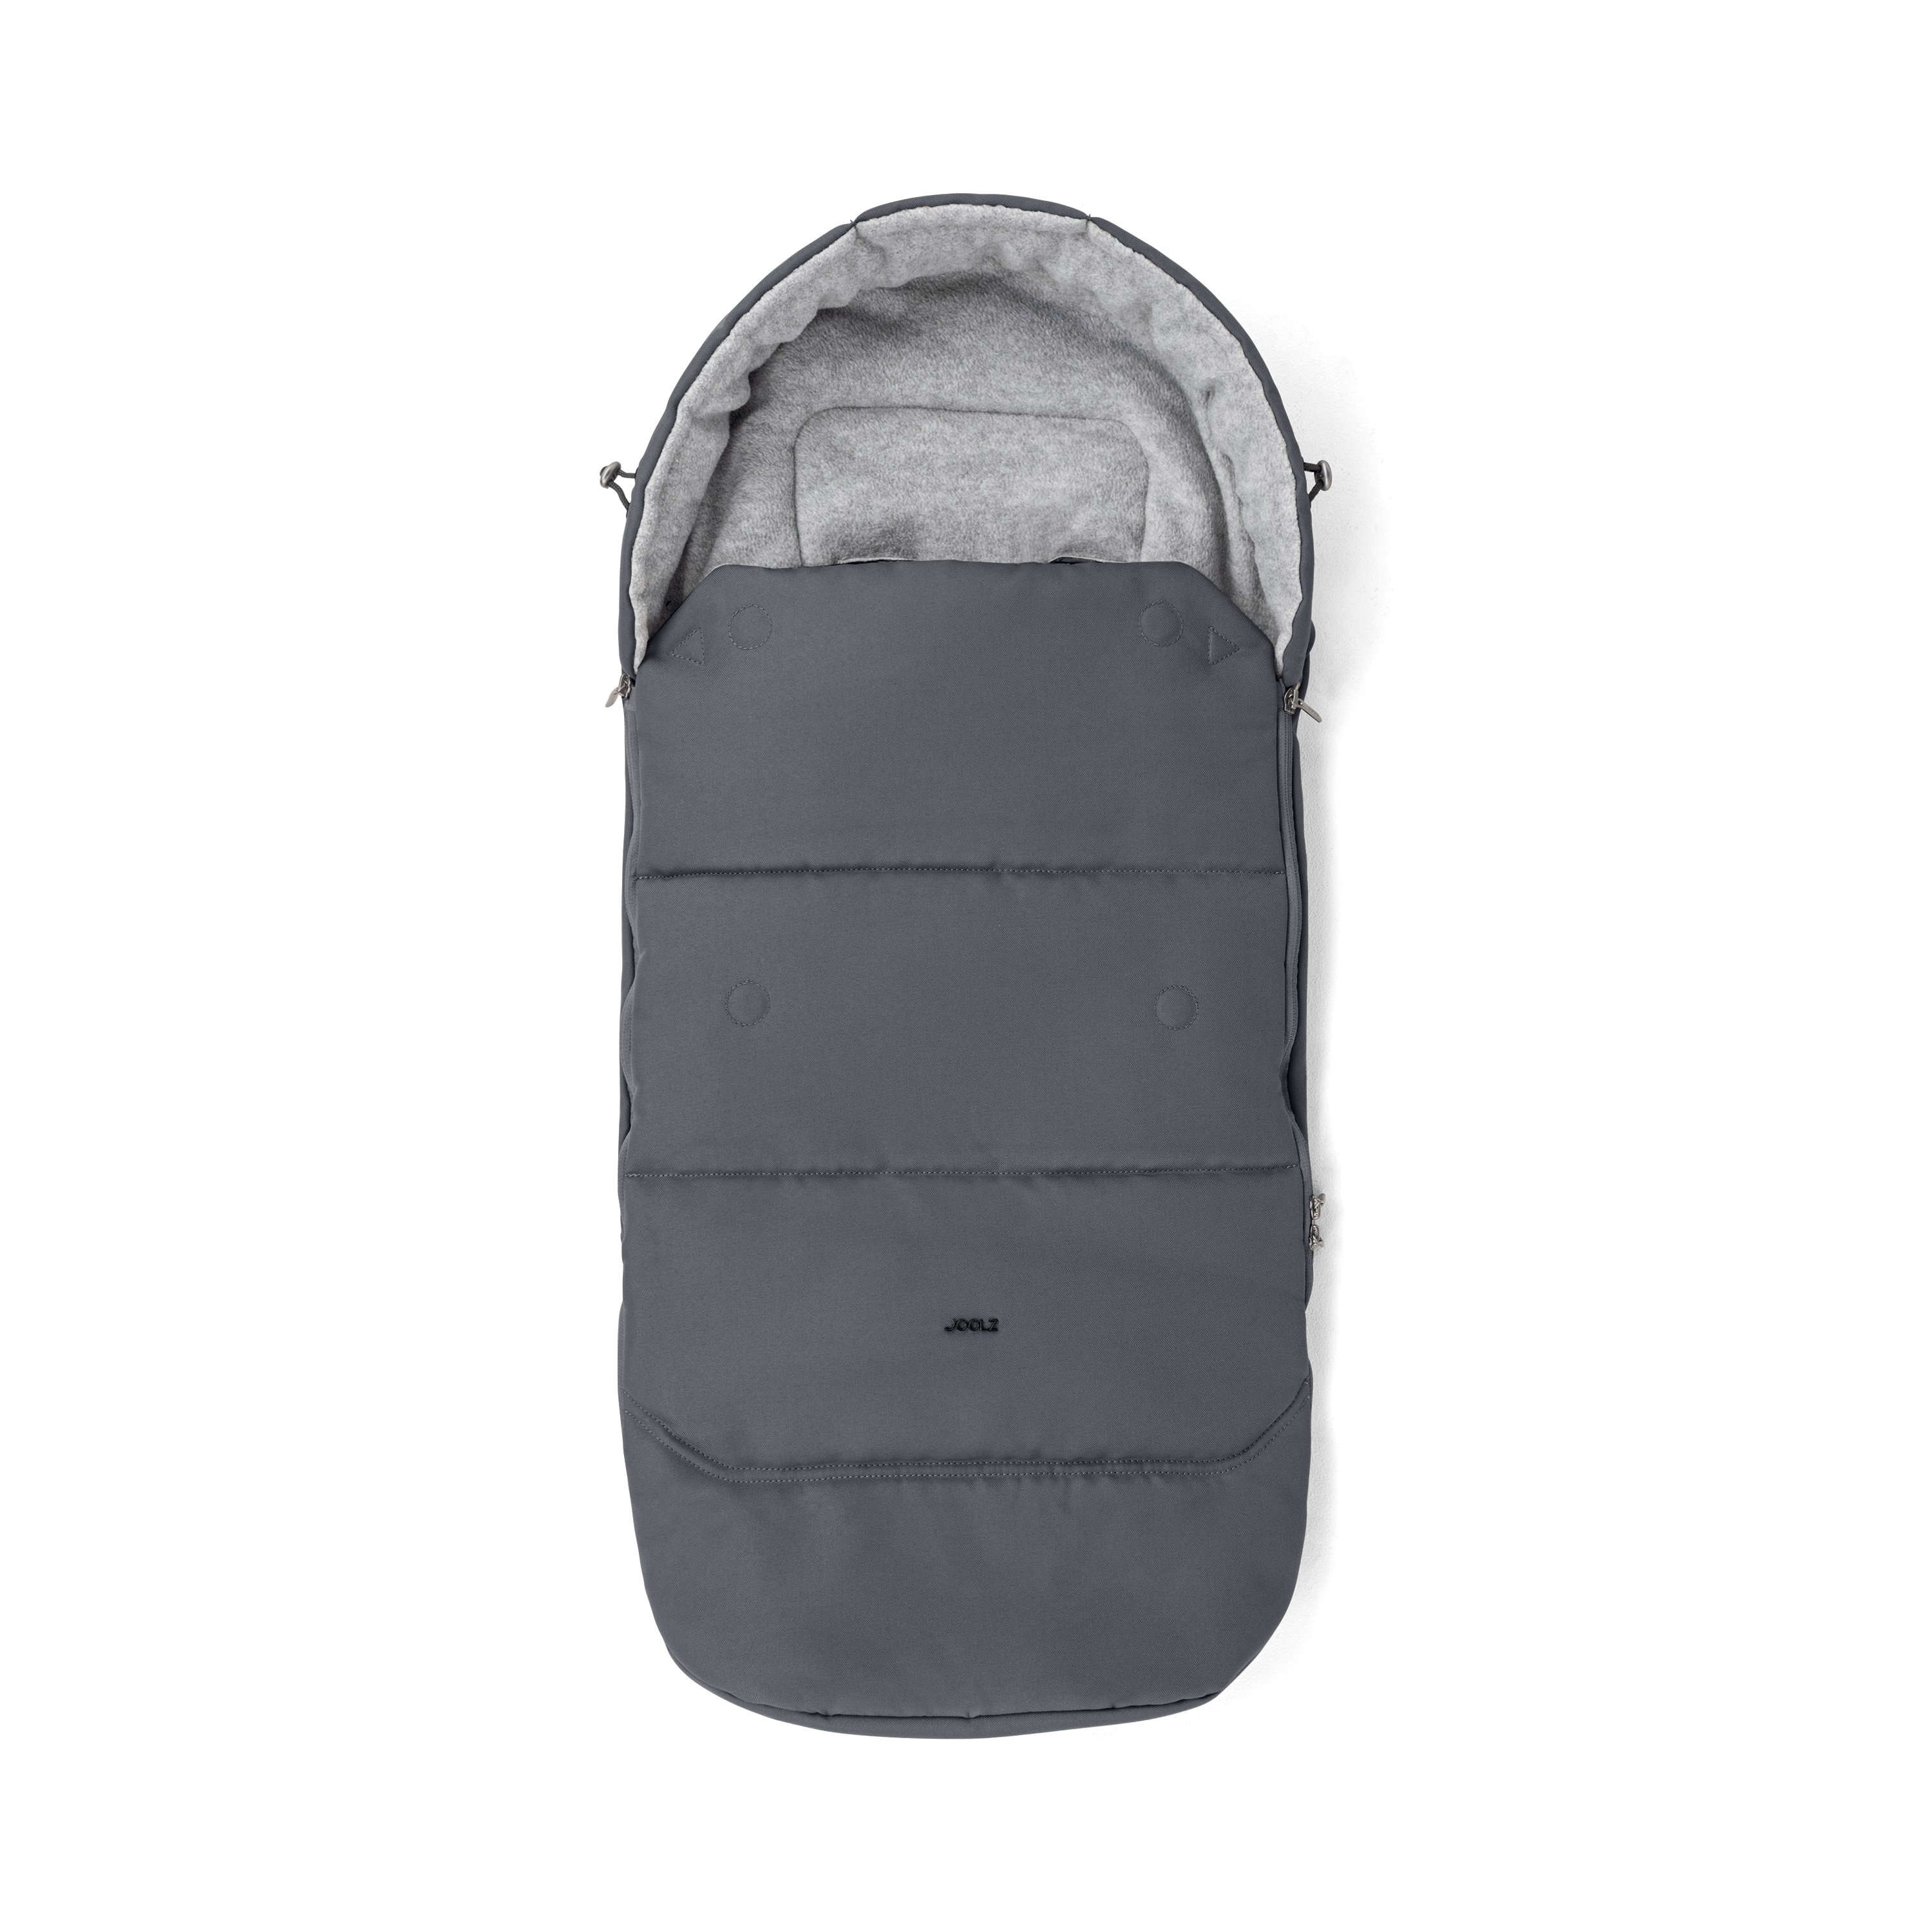 Joolz Universal Footmuff in Stone Grey Footmuffs & Liners 560215